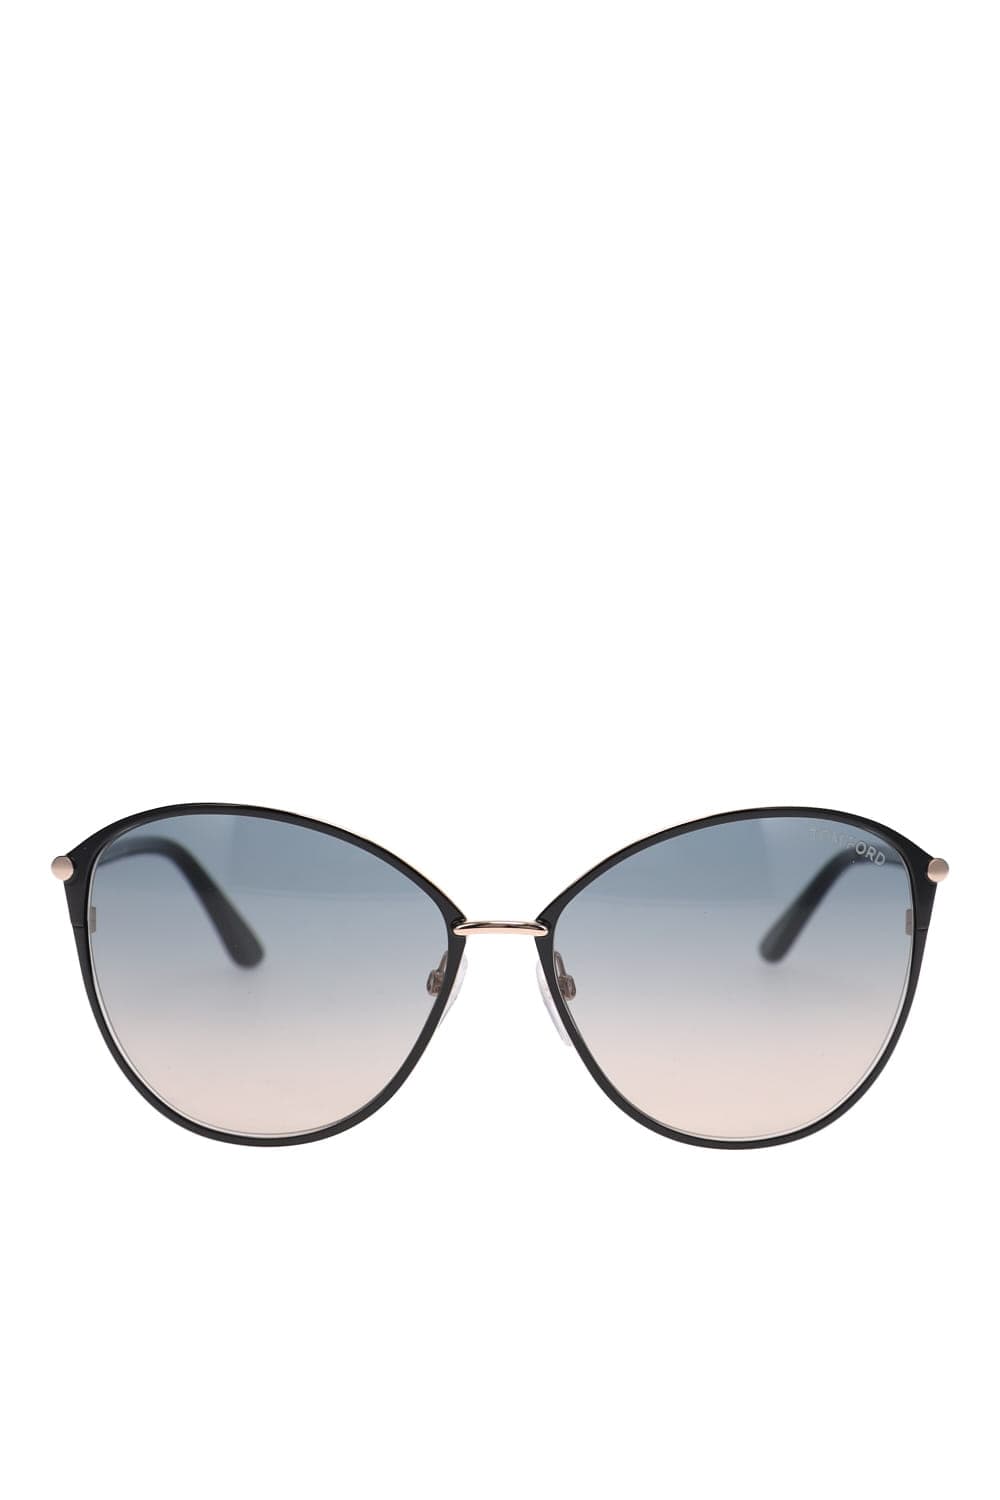 Tom Ford Eyewear FT0320 Shiny Black Sunglasses FT0320 Black/Smoke